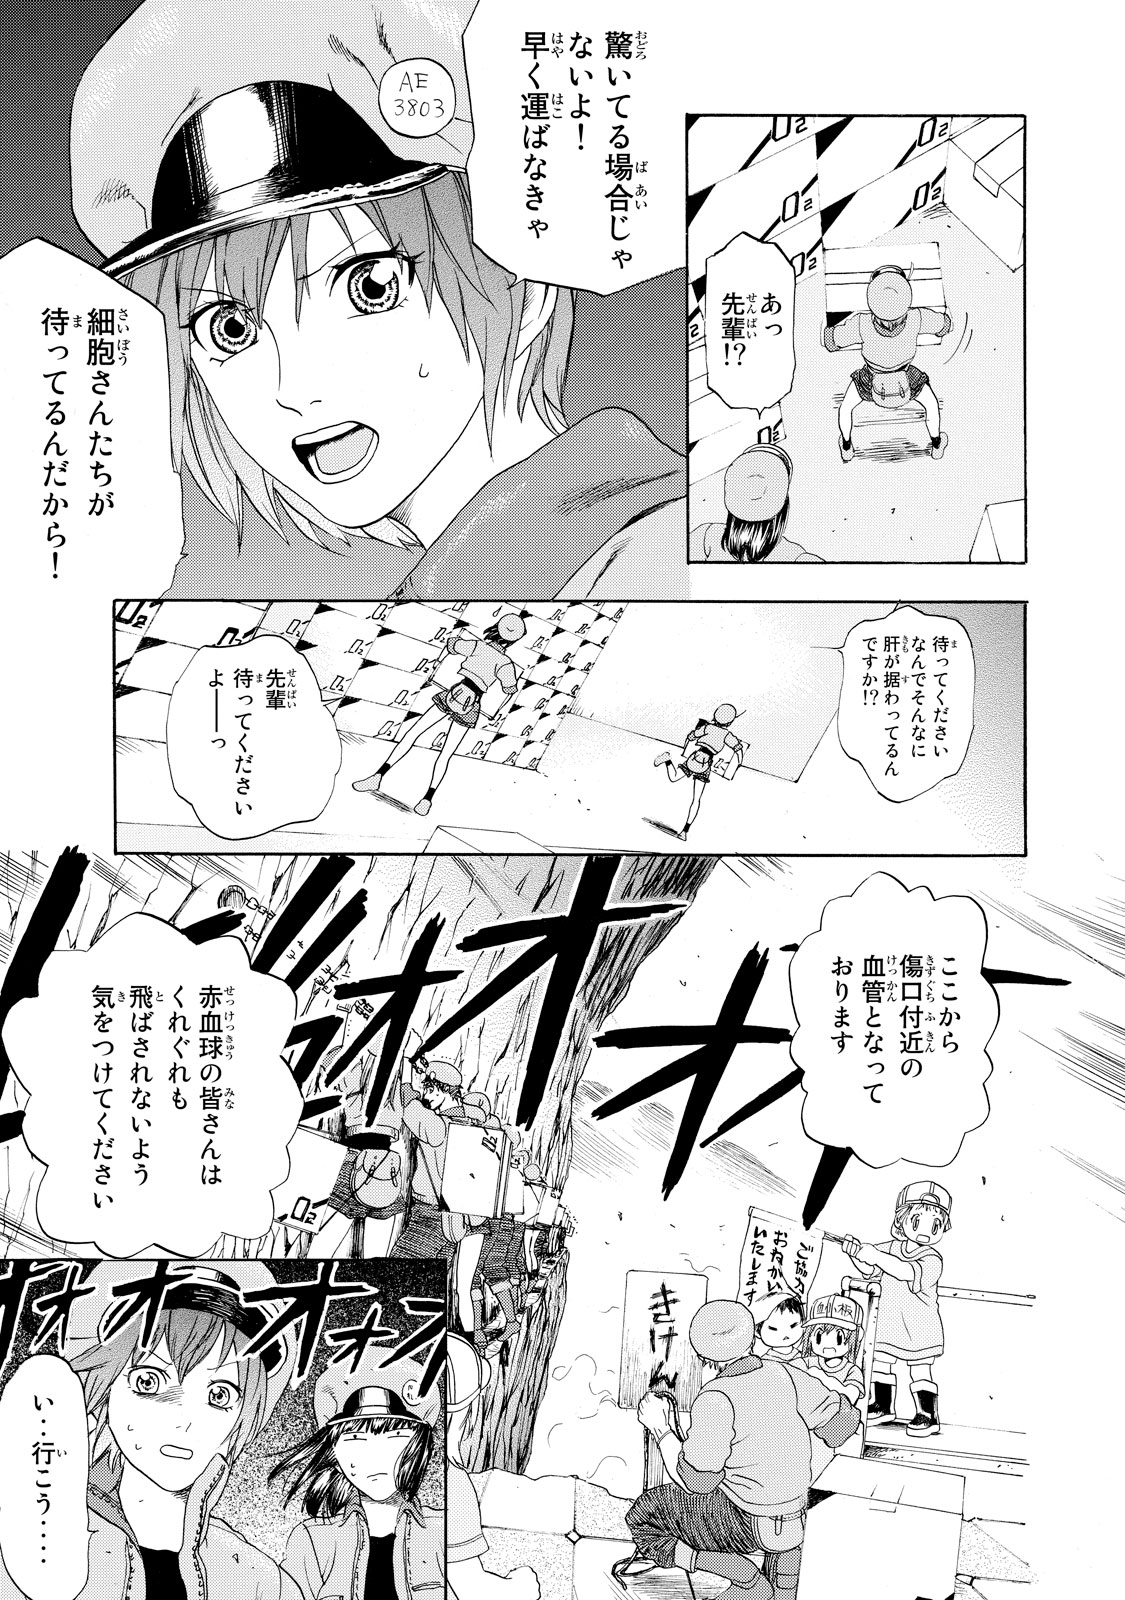 Hataraku Saibou - Chapter 18 - Page 7